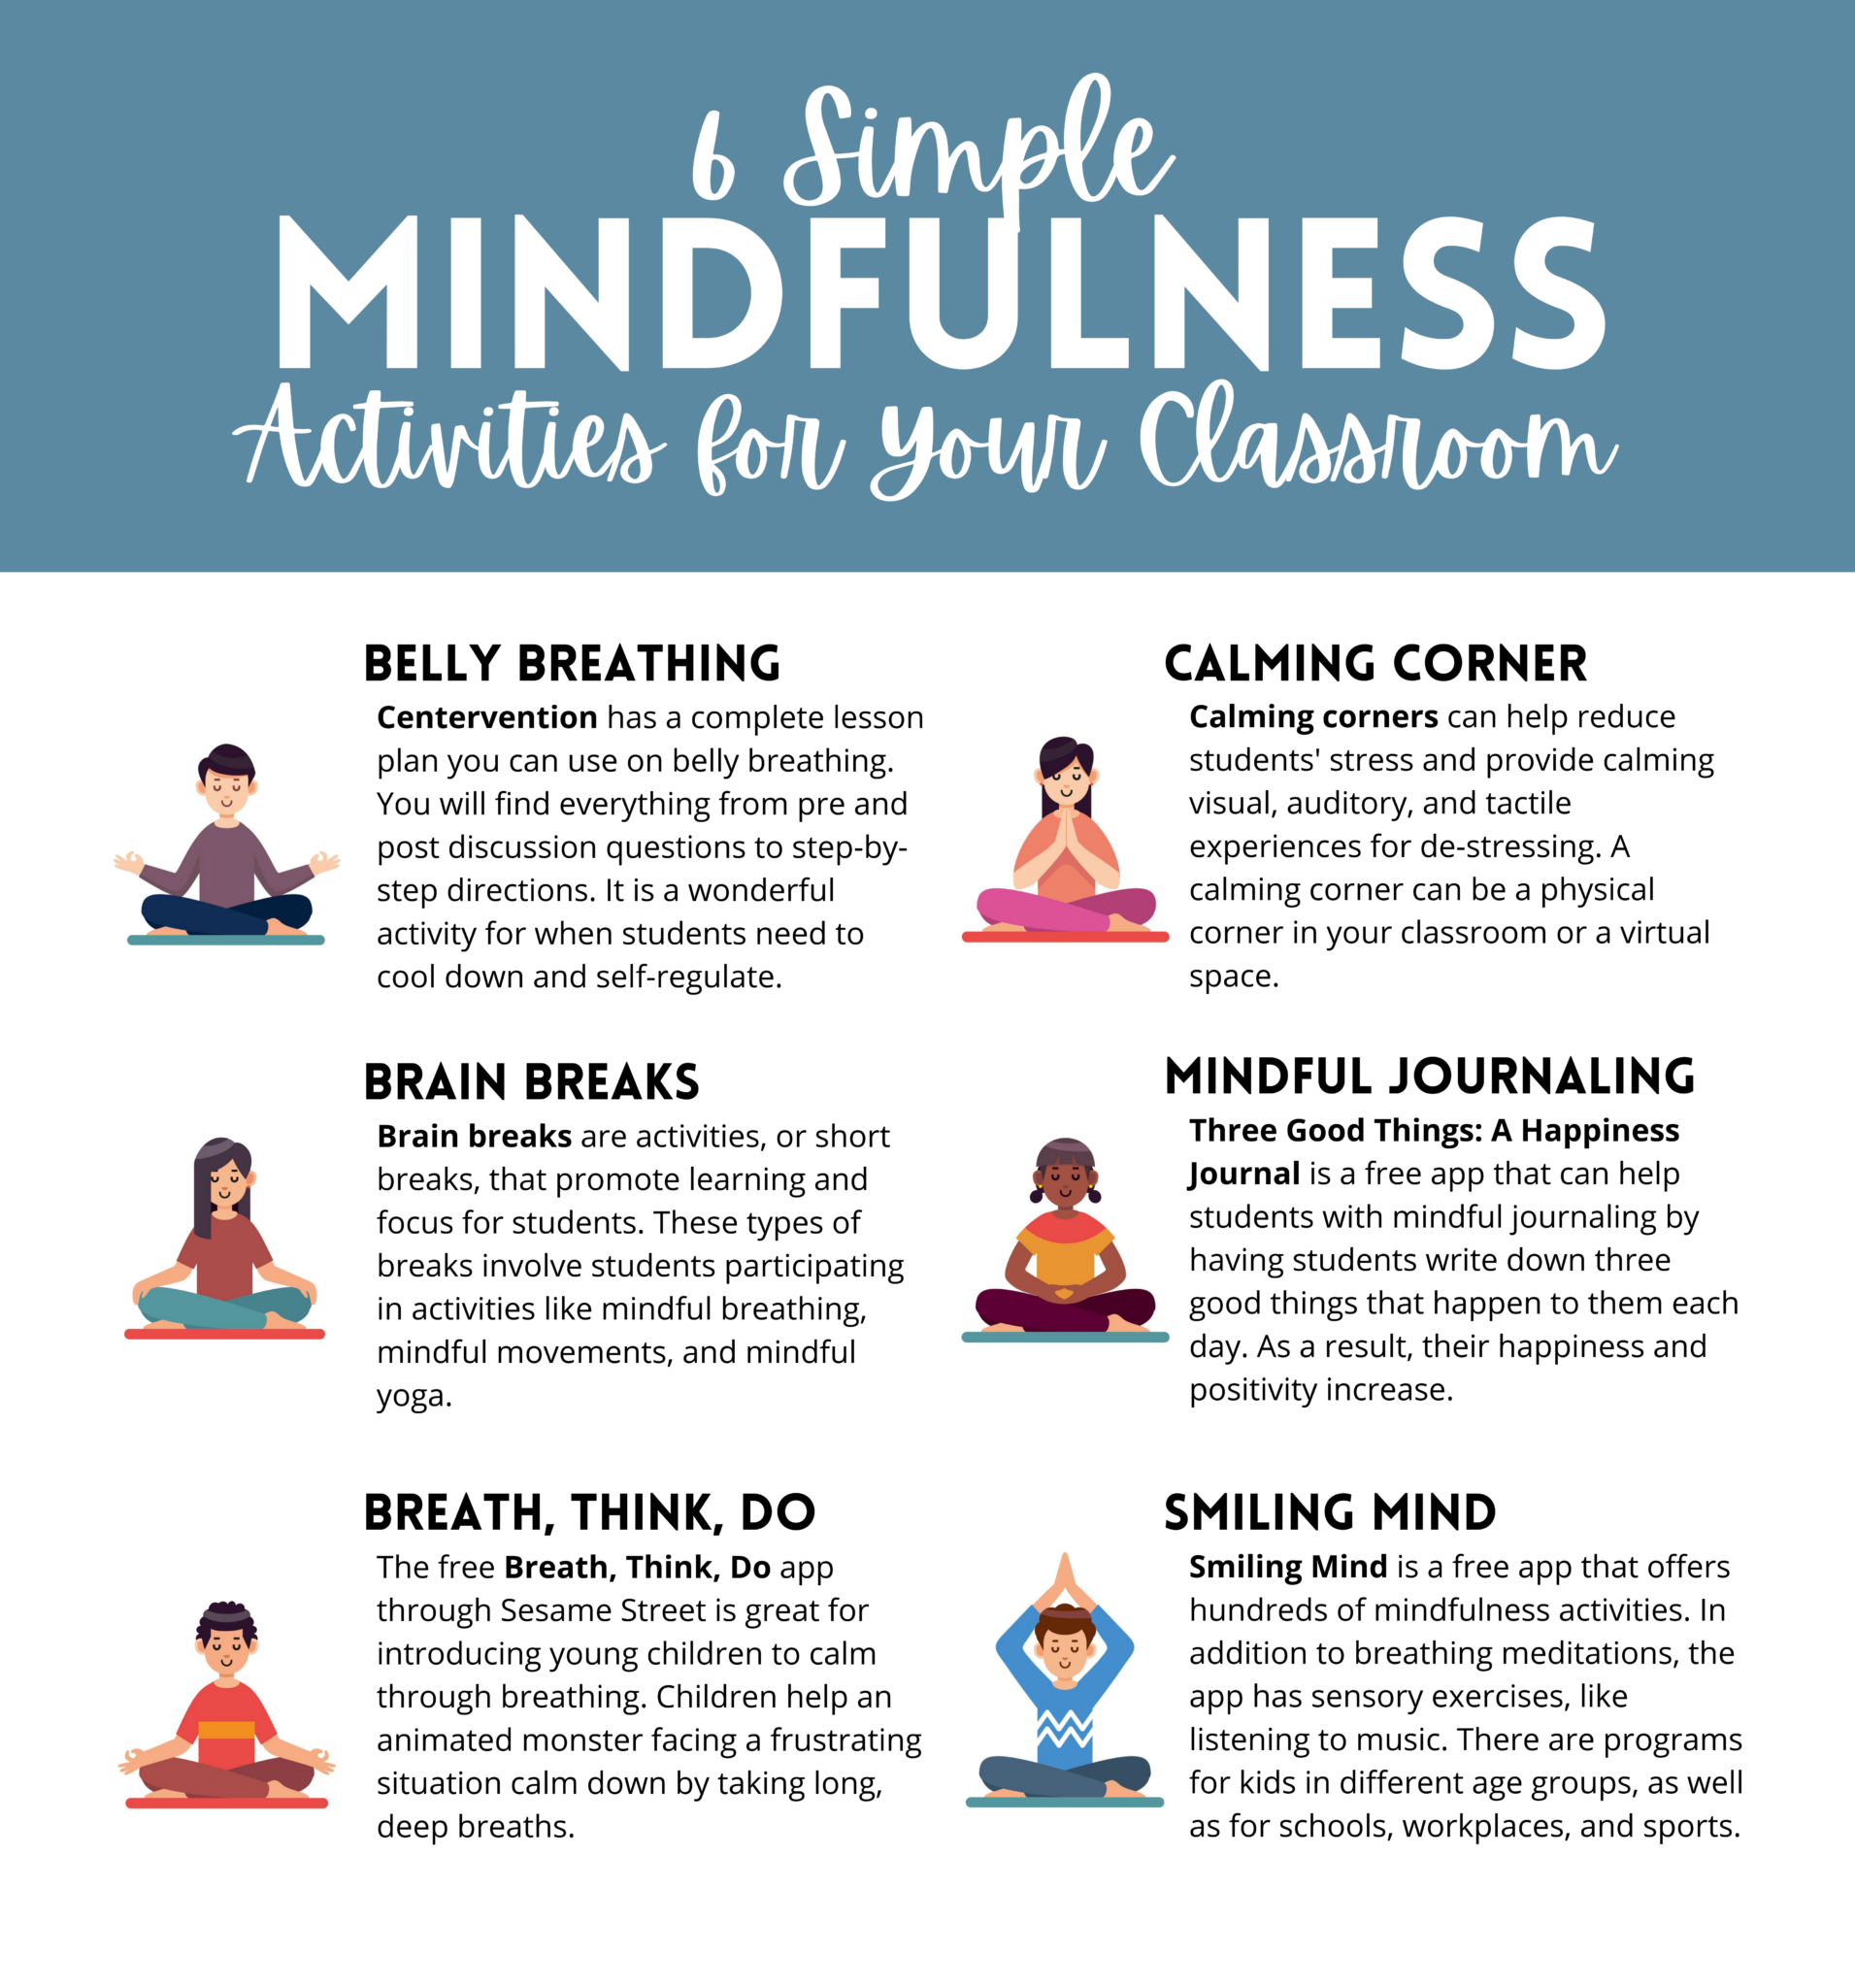 6 Activities Mindfulness Classroom 1911x2048 